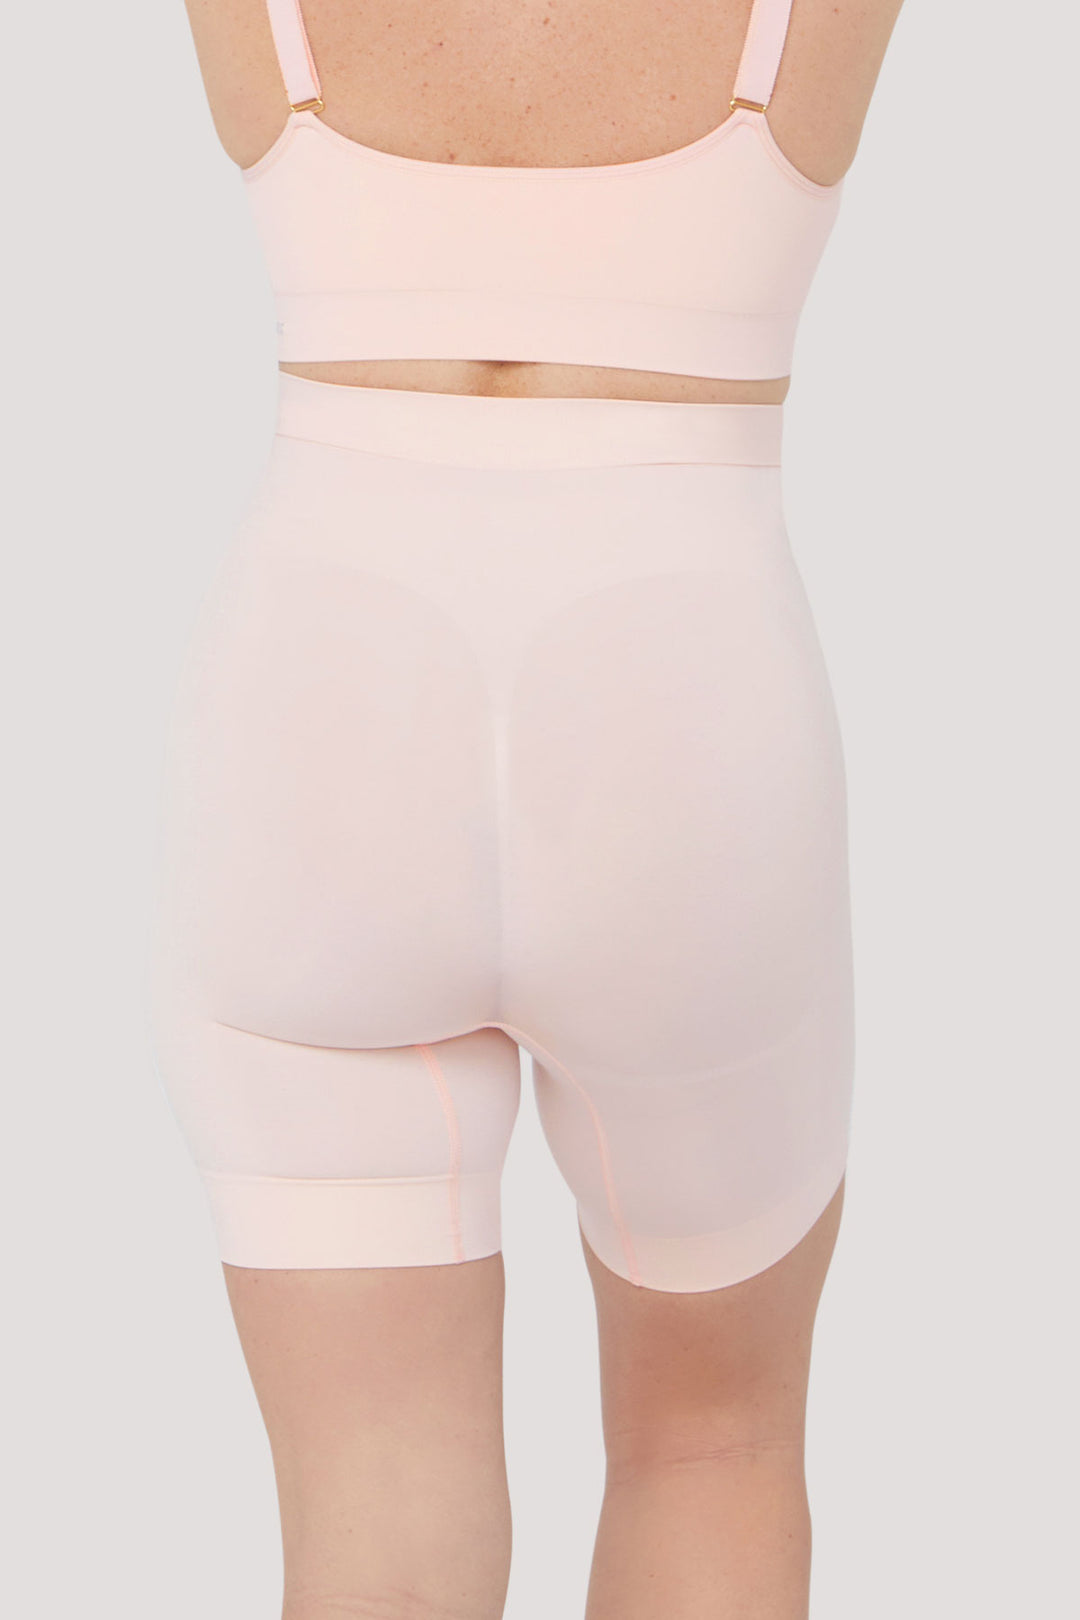 Women's Comfortable shaping Anti-chafing Shorts 2 pack | Bella Bodies UK | Blush | Back